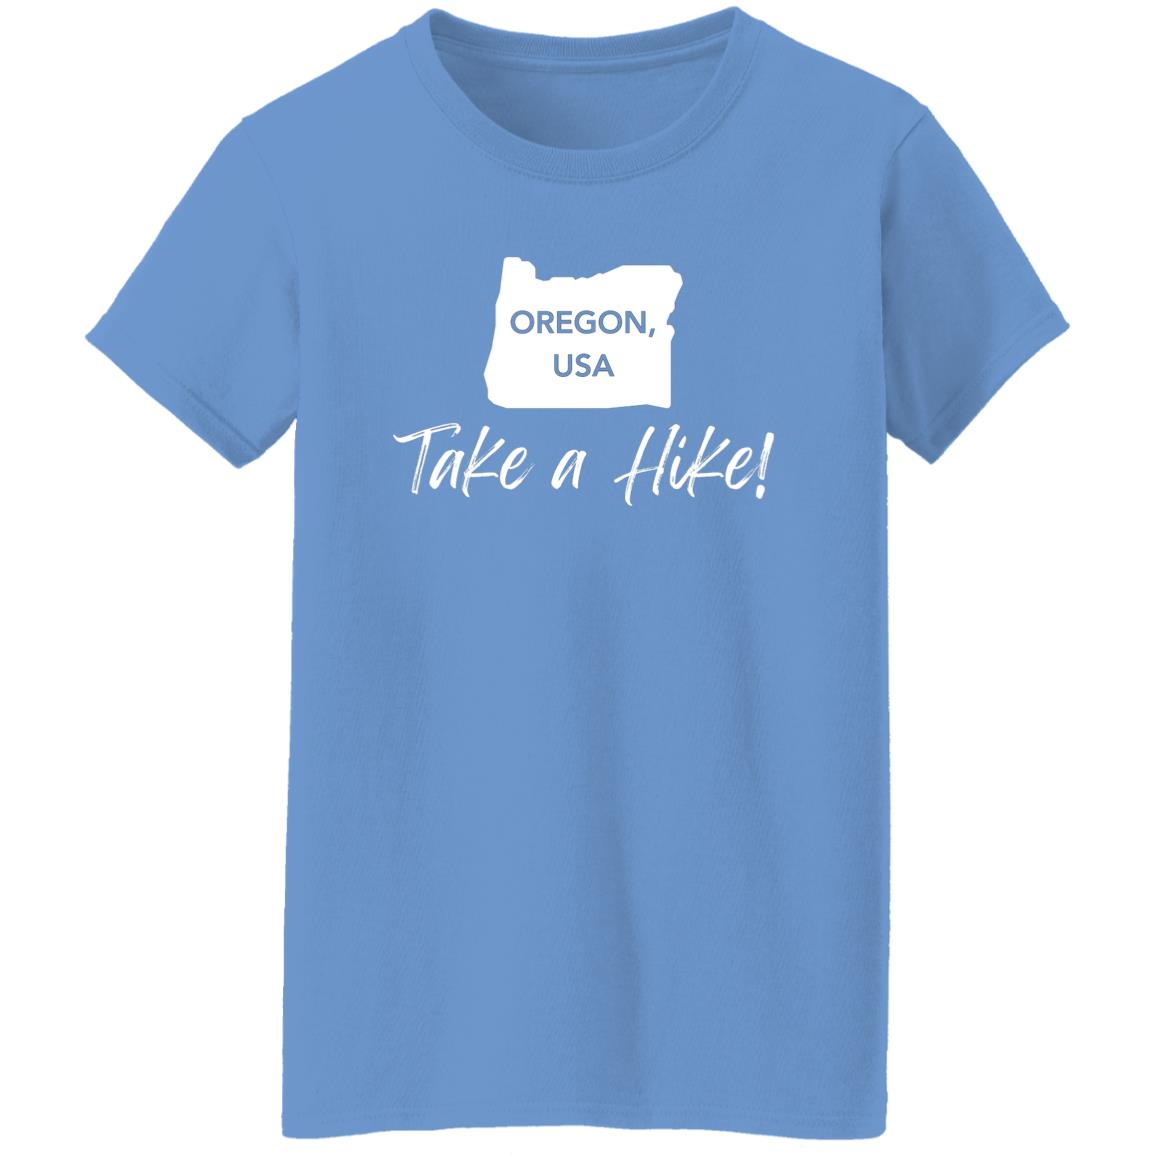 Adventurer Ladies' 5.3 oz. T-Shirt - Take a Hike Oregon white print